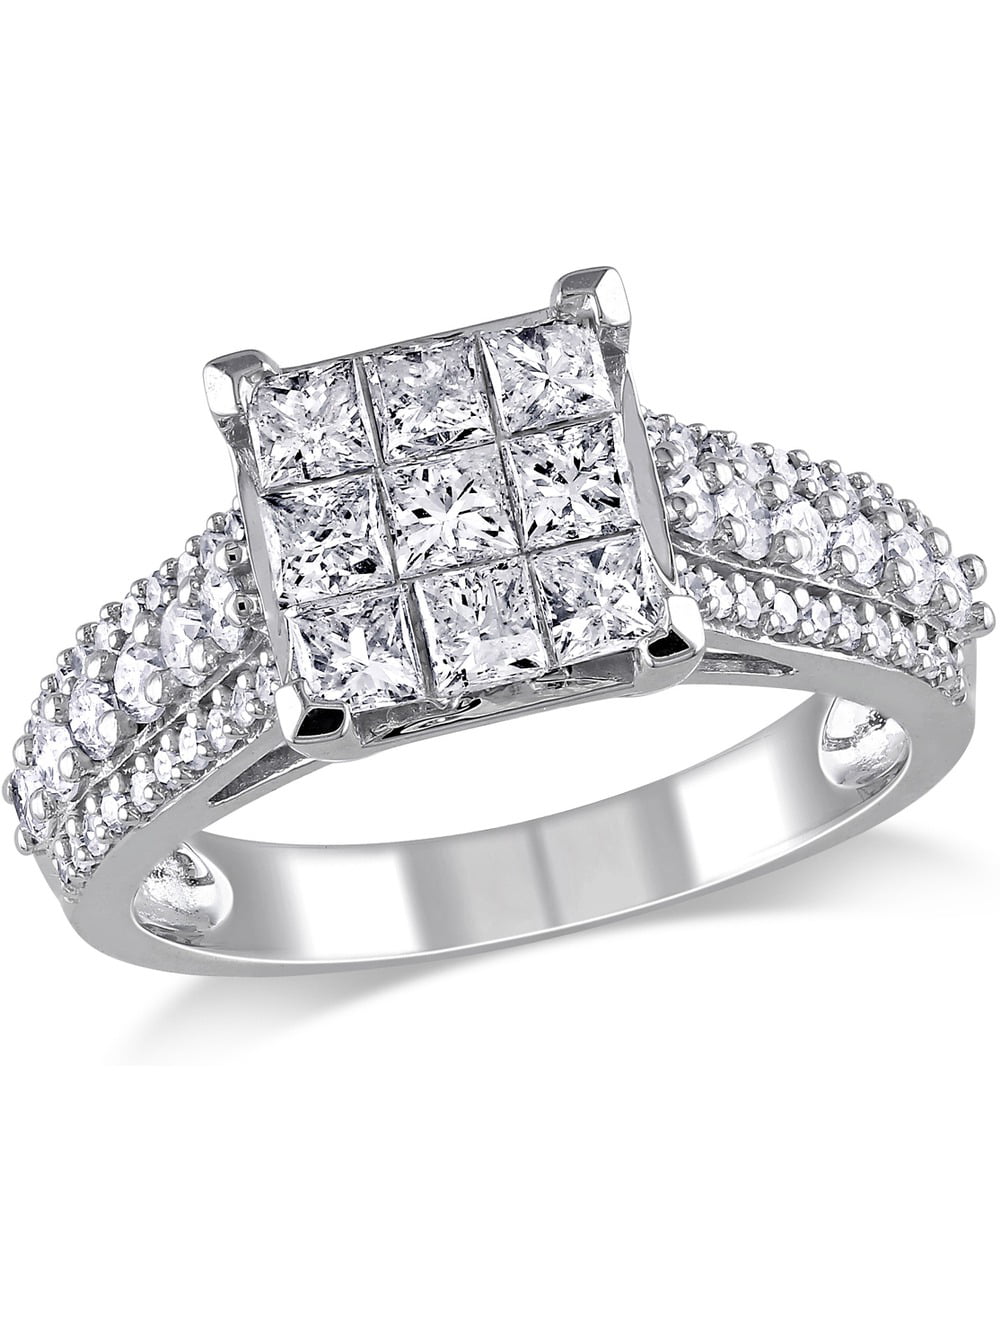 1 1/2 Carat (Ctw G-H, I2-I3) Princess-Cut Diamond Engagement Ring in ...